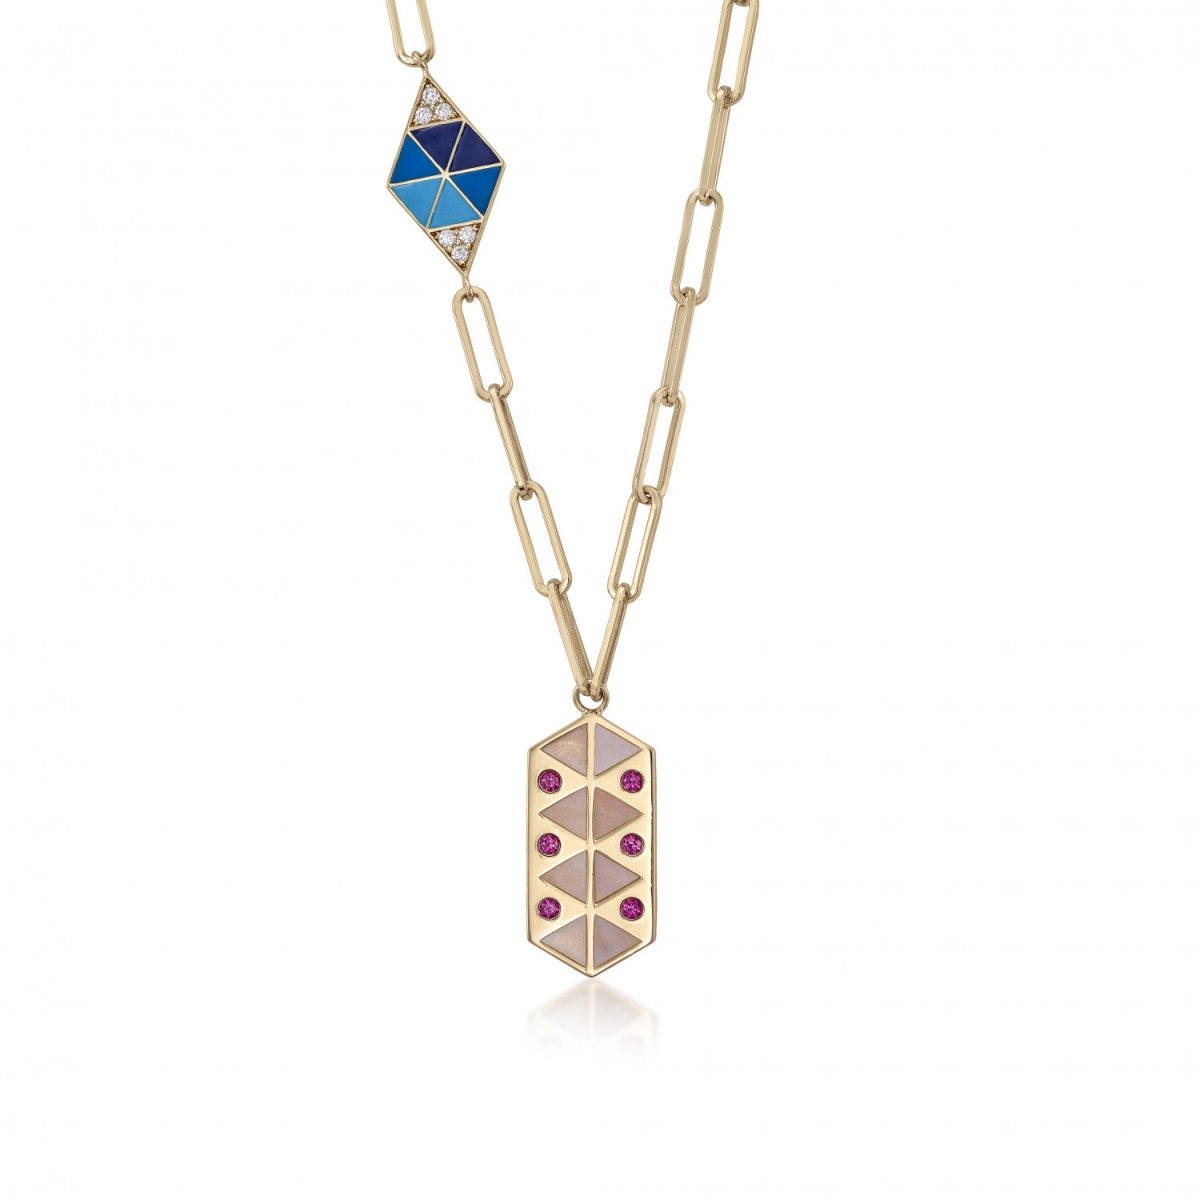 Paperclip pendant necklaces with enamel design - LINEARGENT